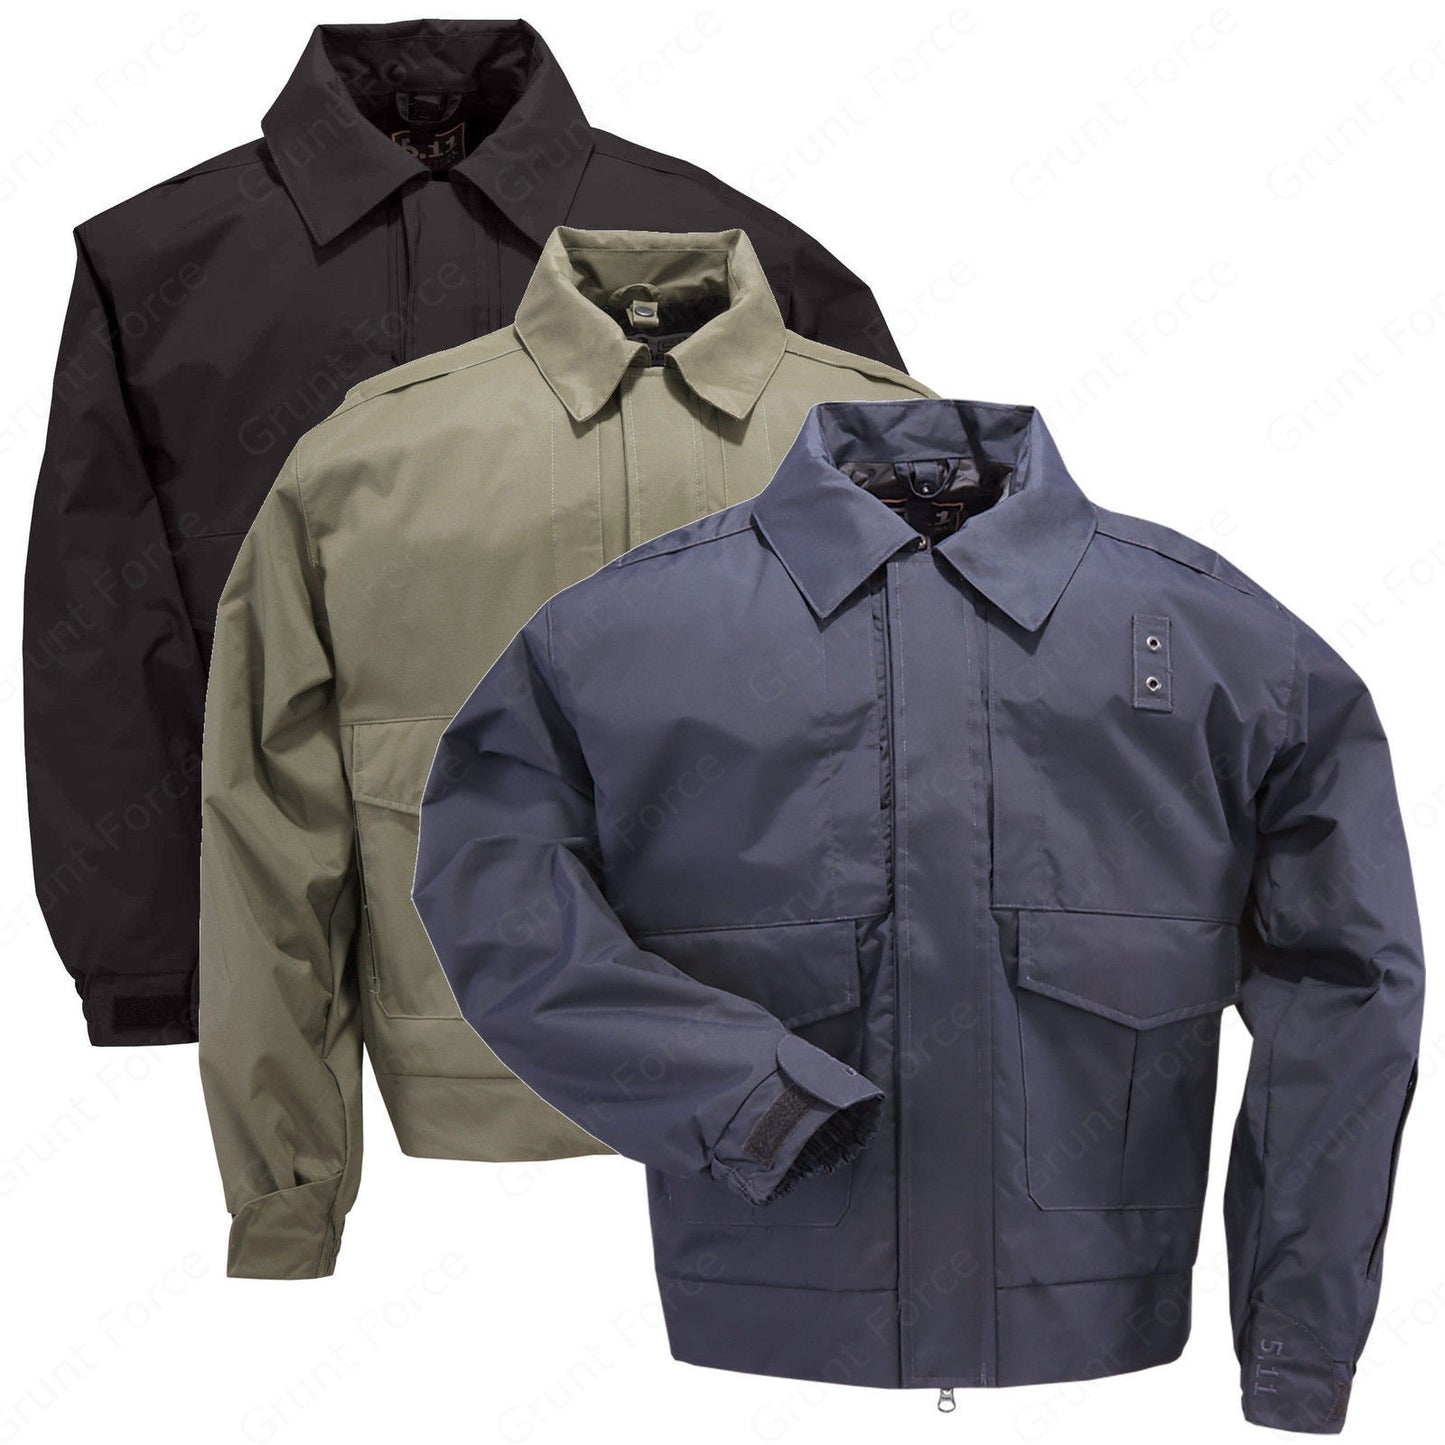 5.11 Tactical 4-In-1 Patrol Jacket - Men's All Season Jacket w/ Removable Liner